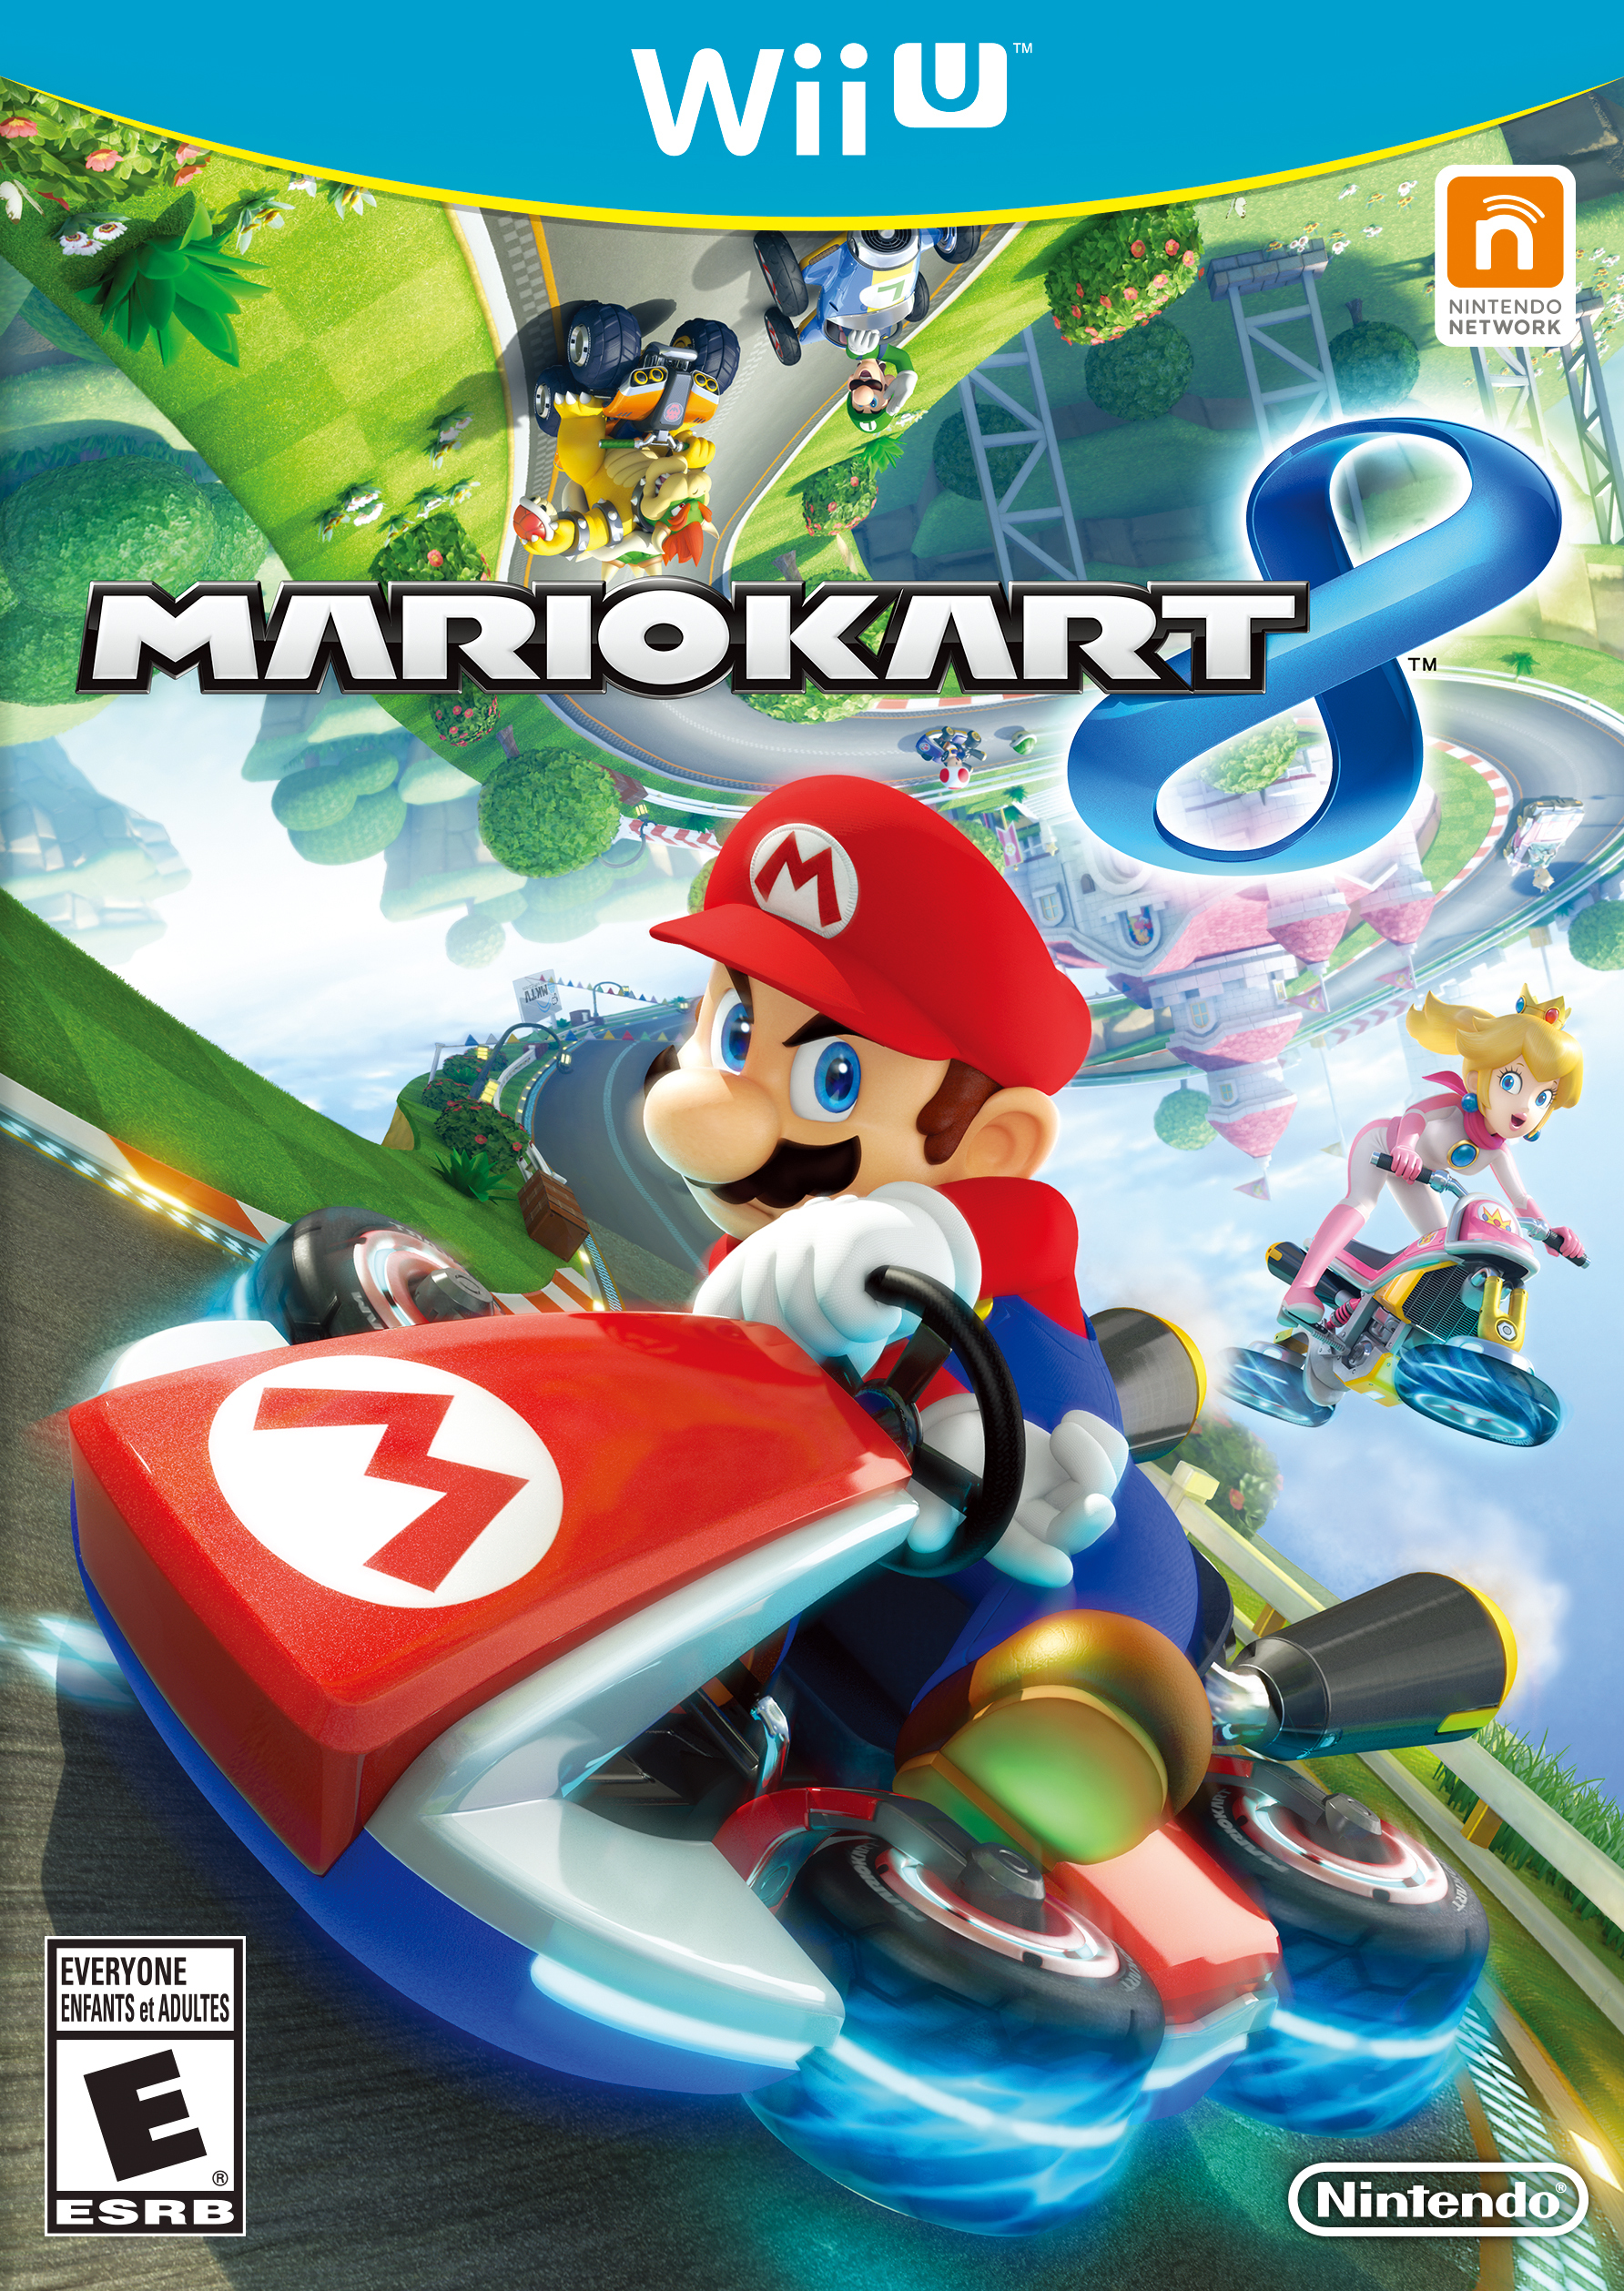 All-Ages Mario Kart Tournament